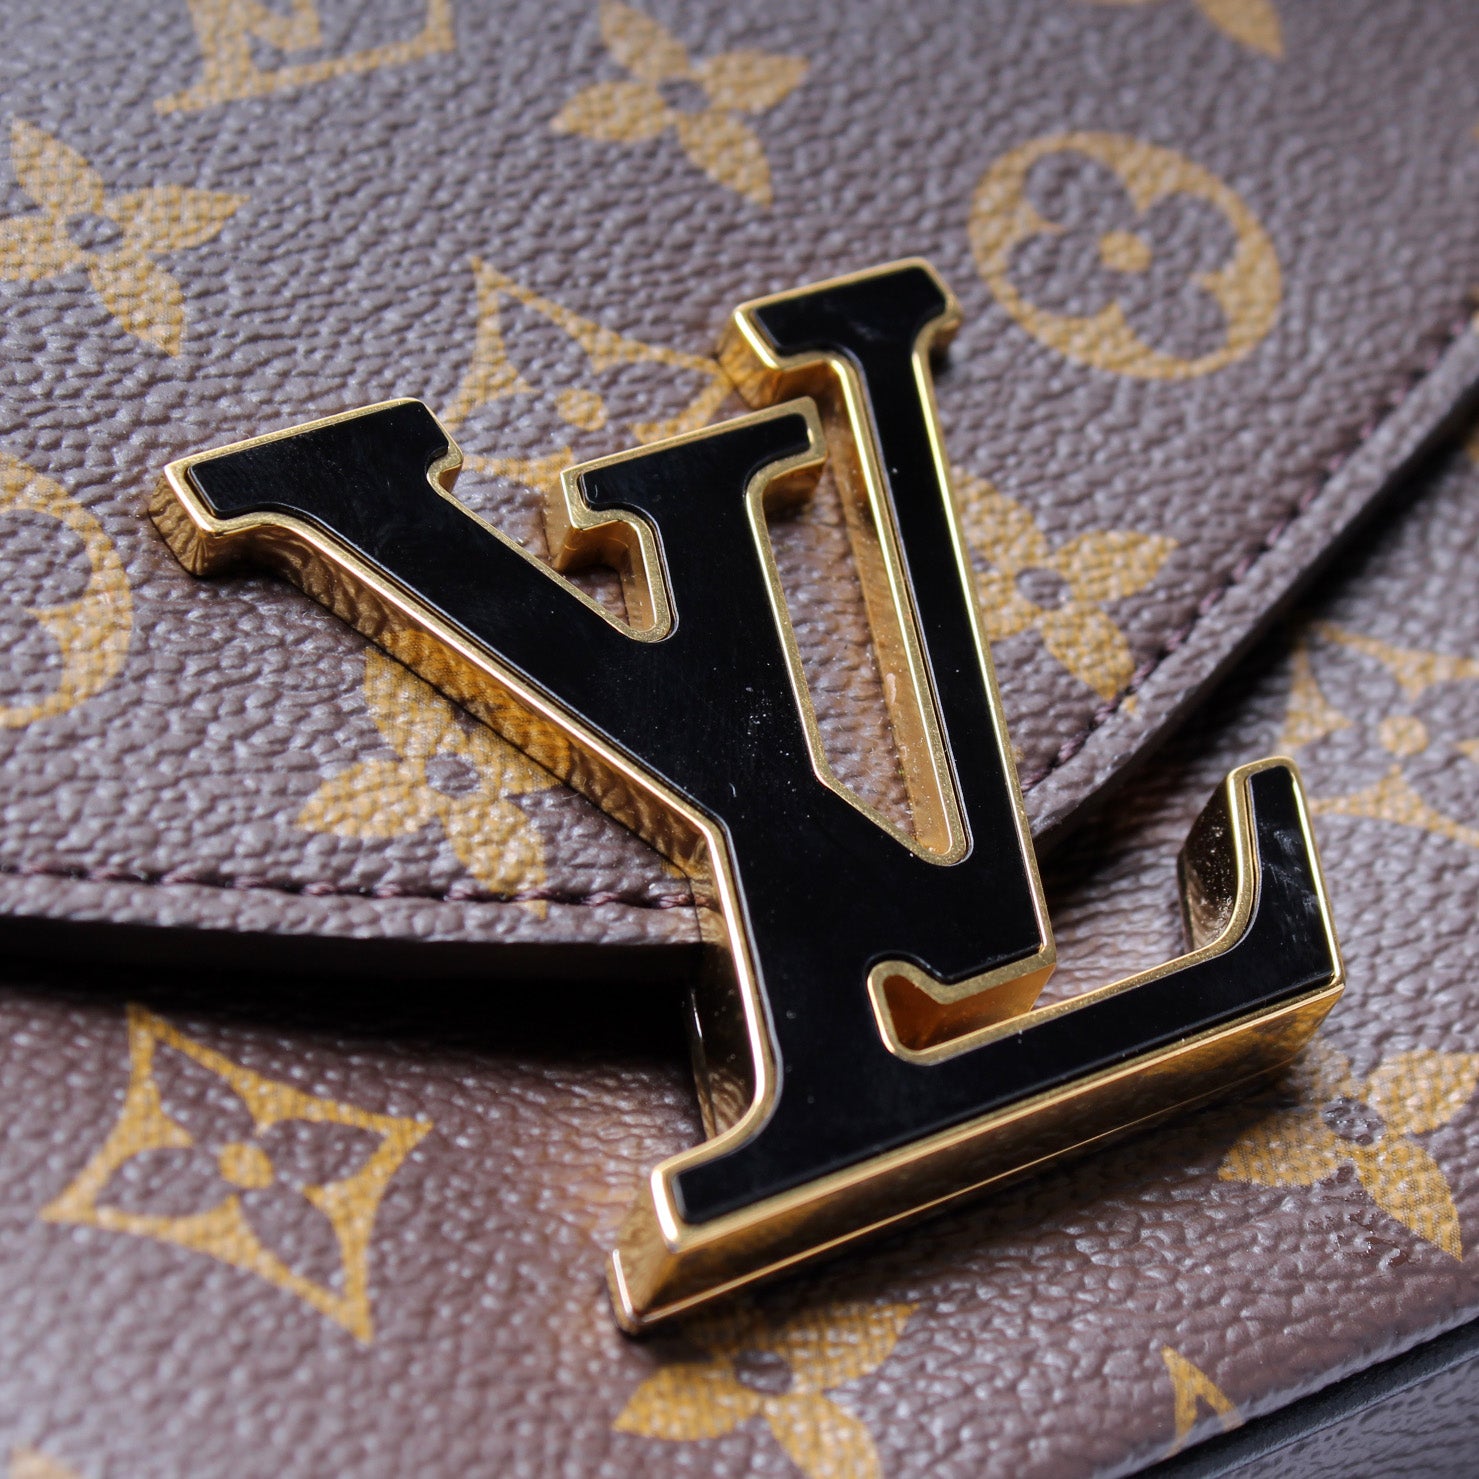 Louis Vuitton Monogram Passy NM Noir